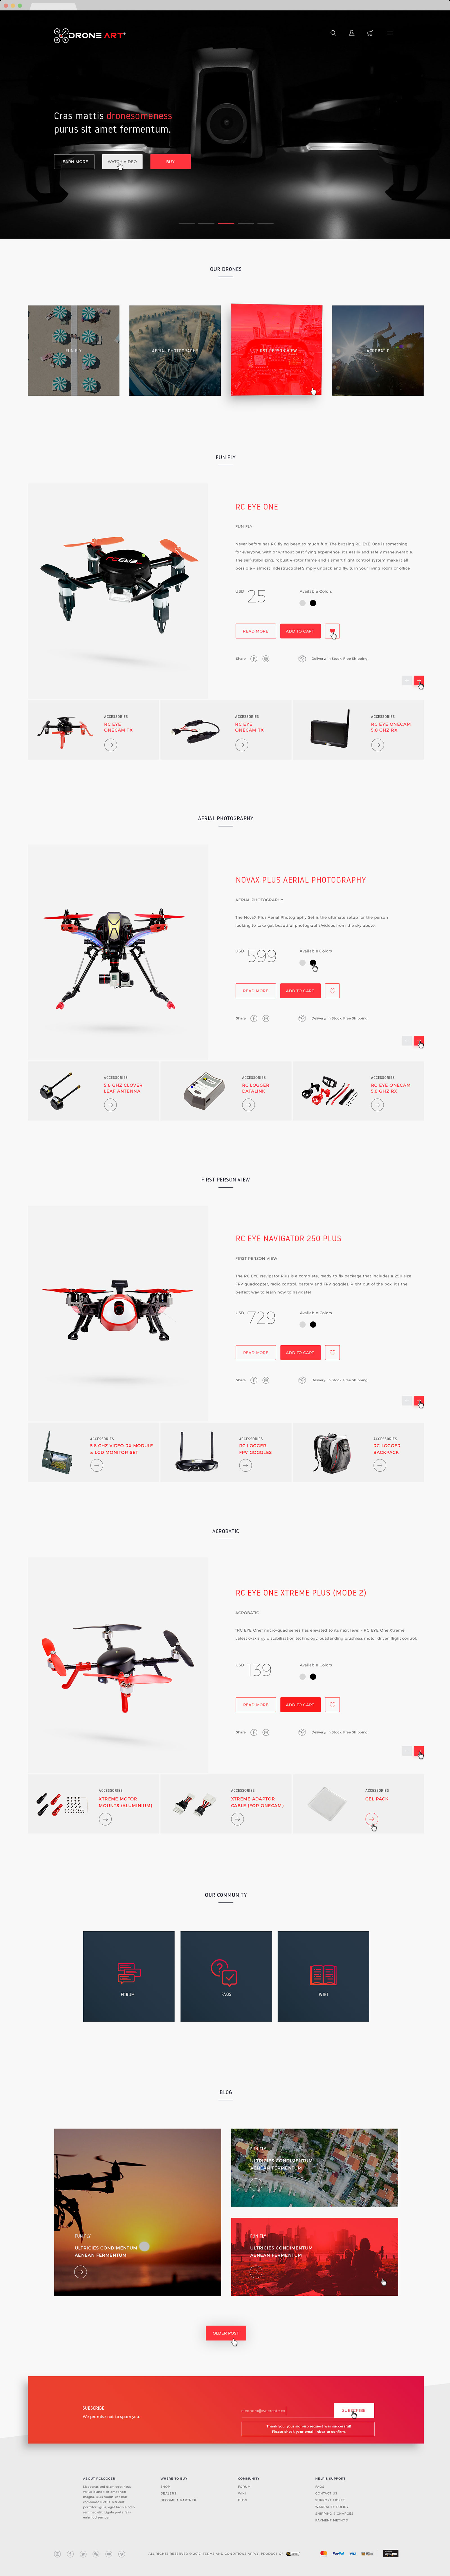 e commerce singapore drone art 01 - Drone Art